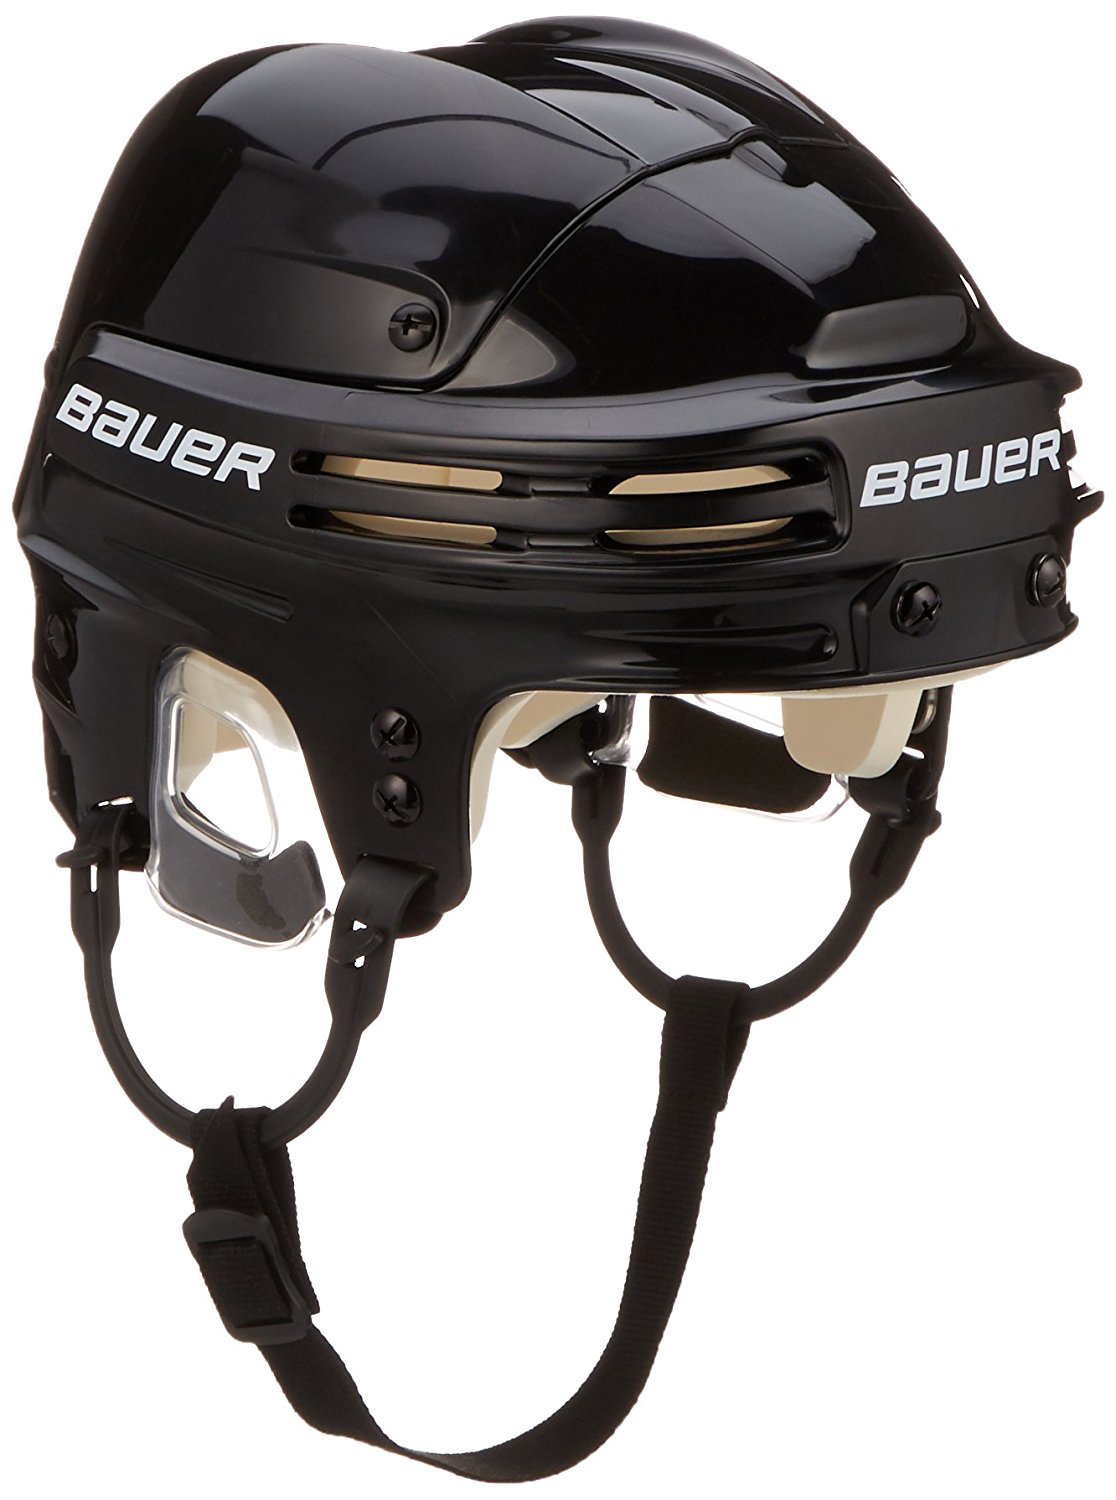 Bauer hockey helmets review